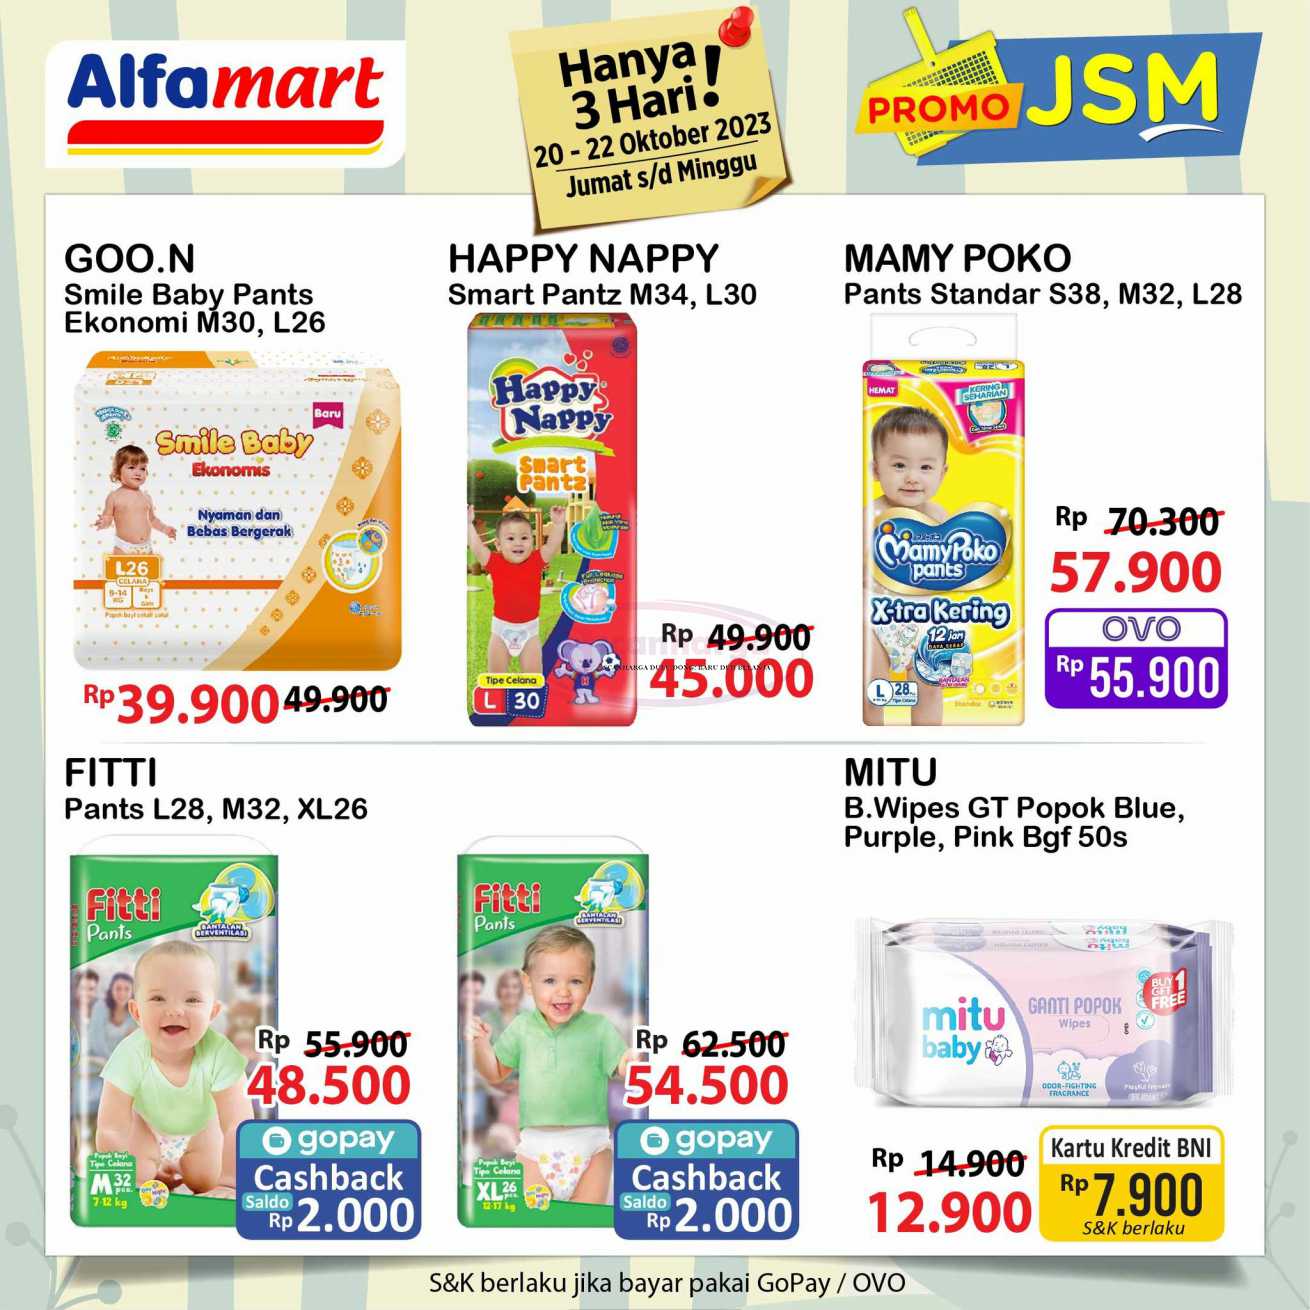 Katalog Promo JSM Alfamart 20 - 22 Oktober 2023 7